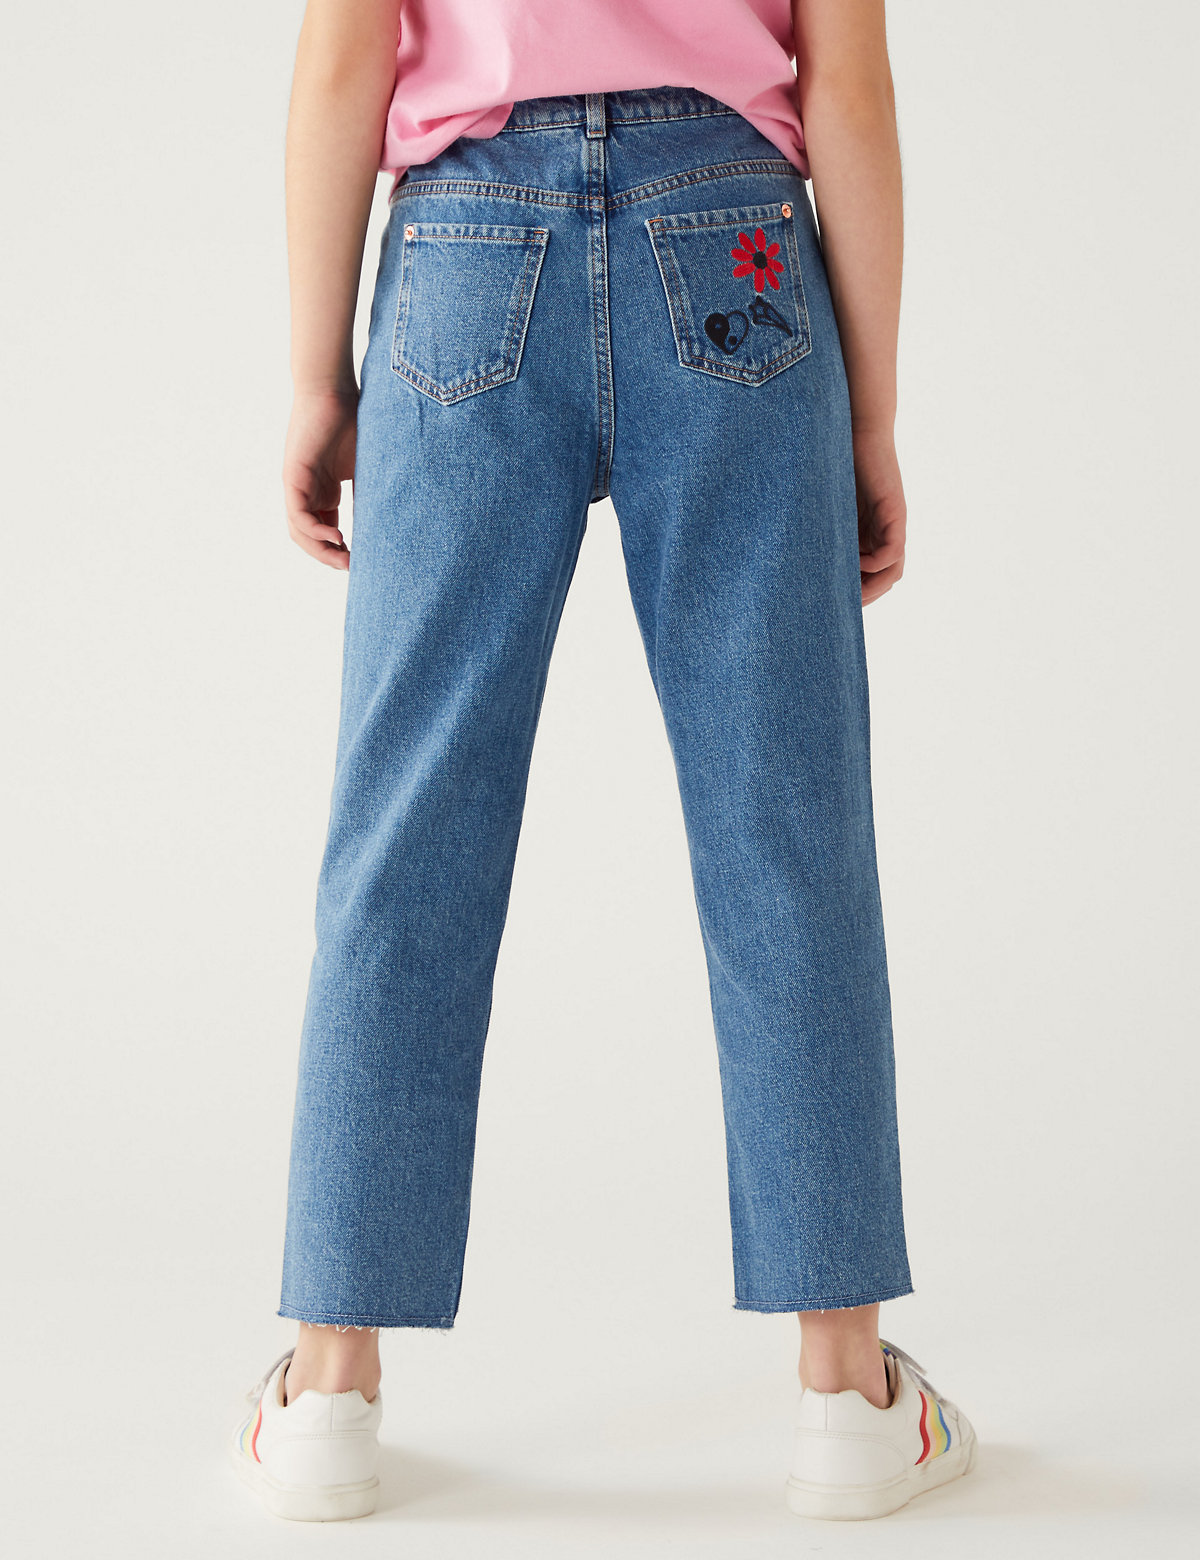 Denim Embroidered Jeans